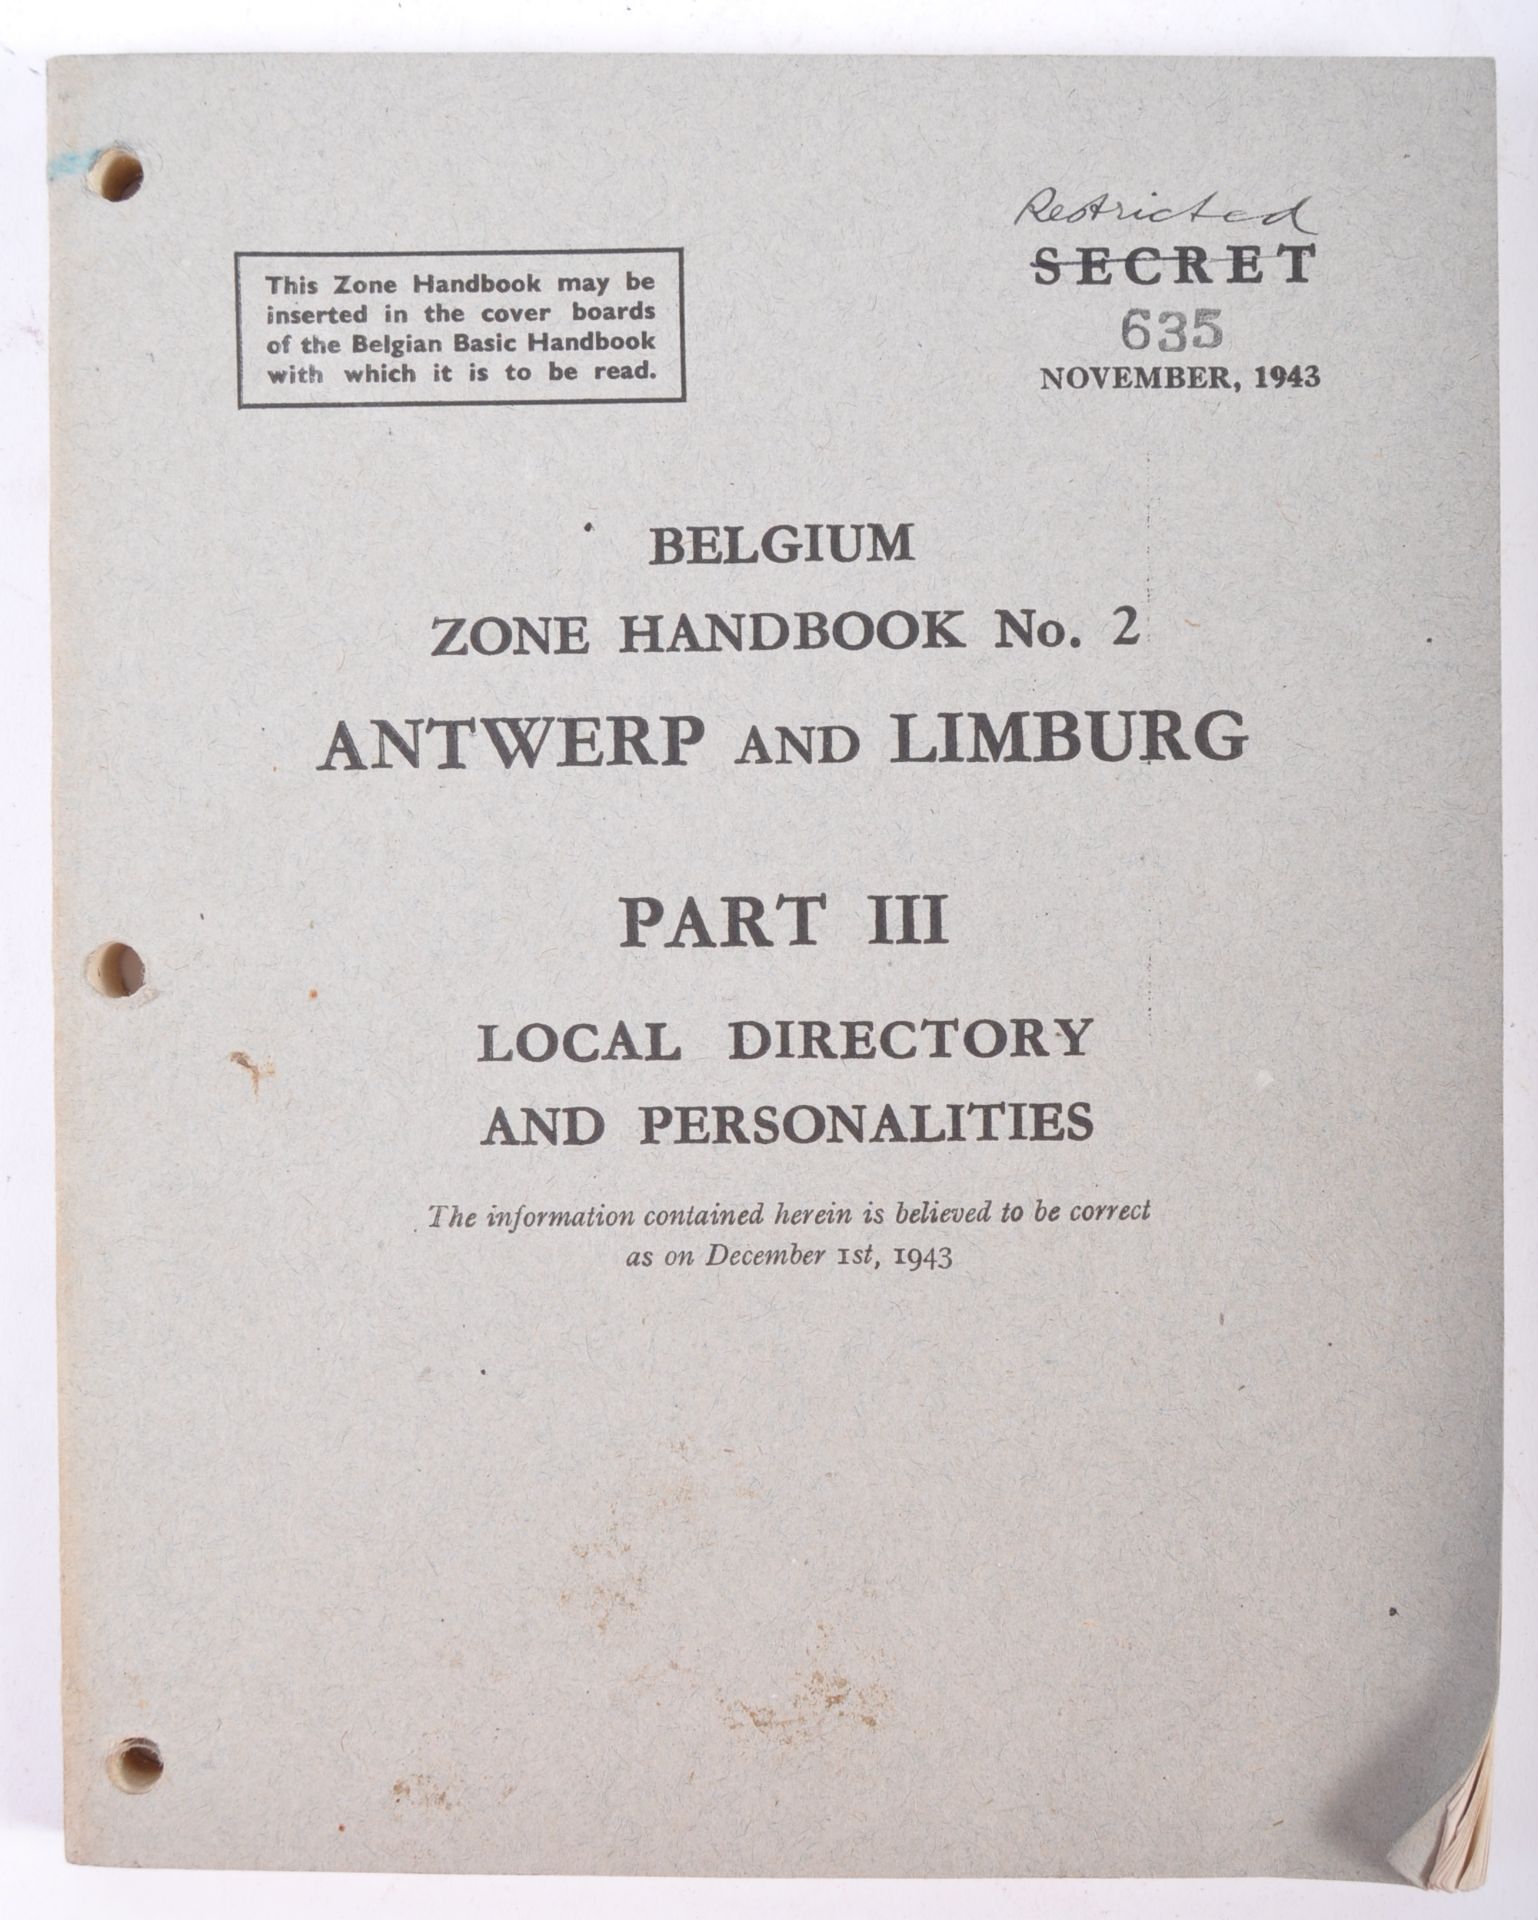 ARTHUR MUGGERIDGE WWII ESCAPE & EVADE COLLECTION - RESTRICTED HANDBOOK